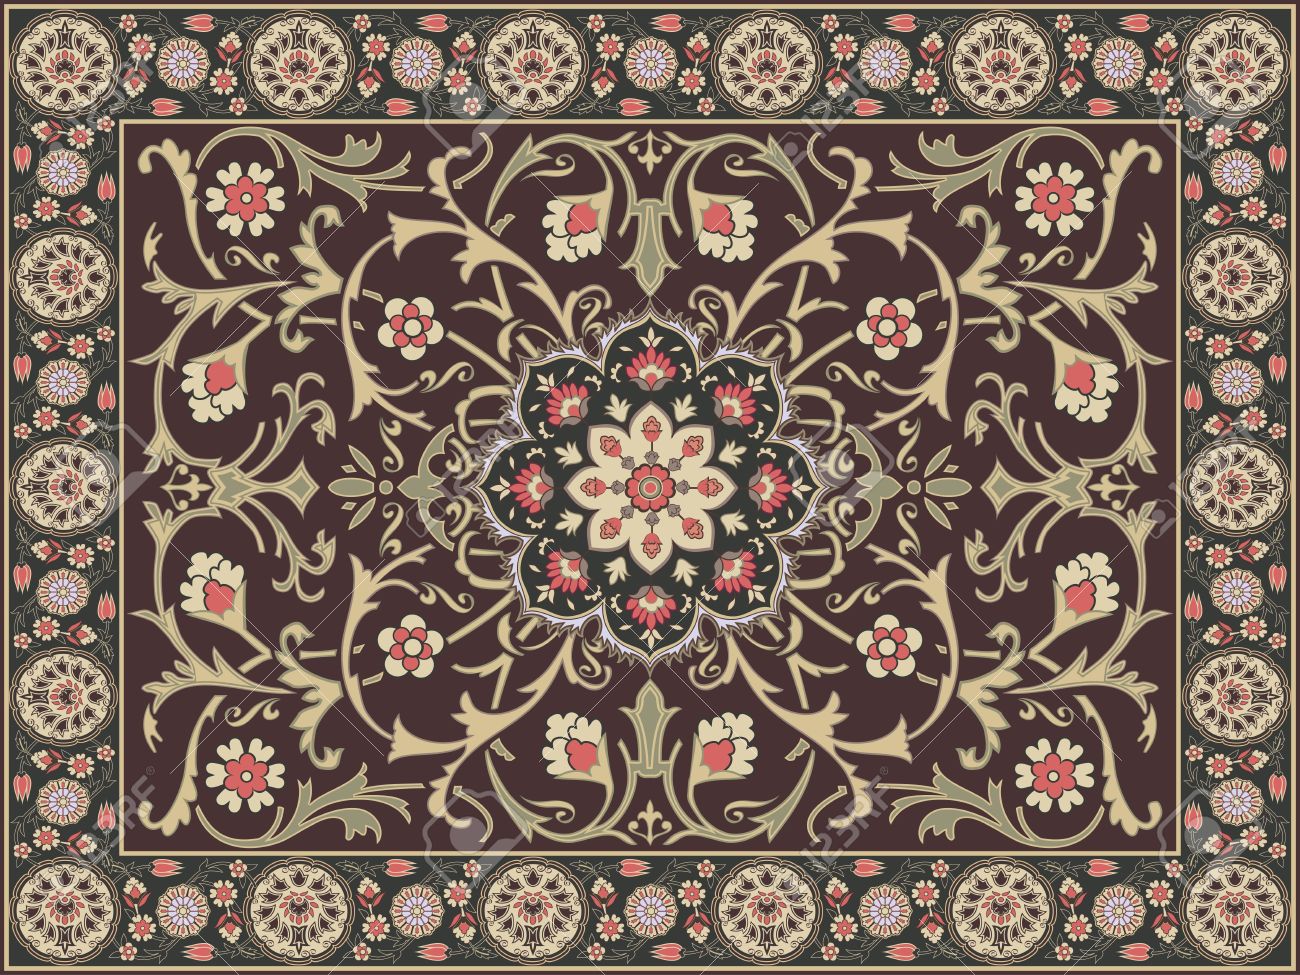 arabic style carpet design stock vector - 11674191 DFRSCIS